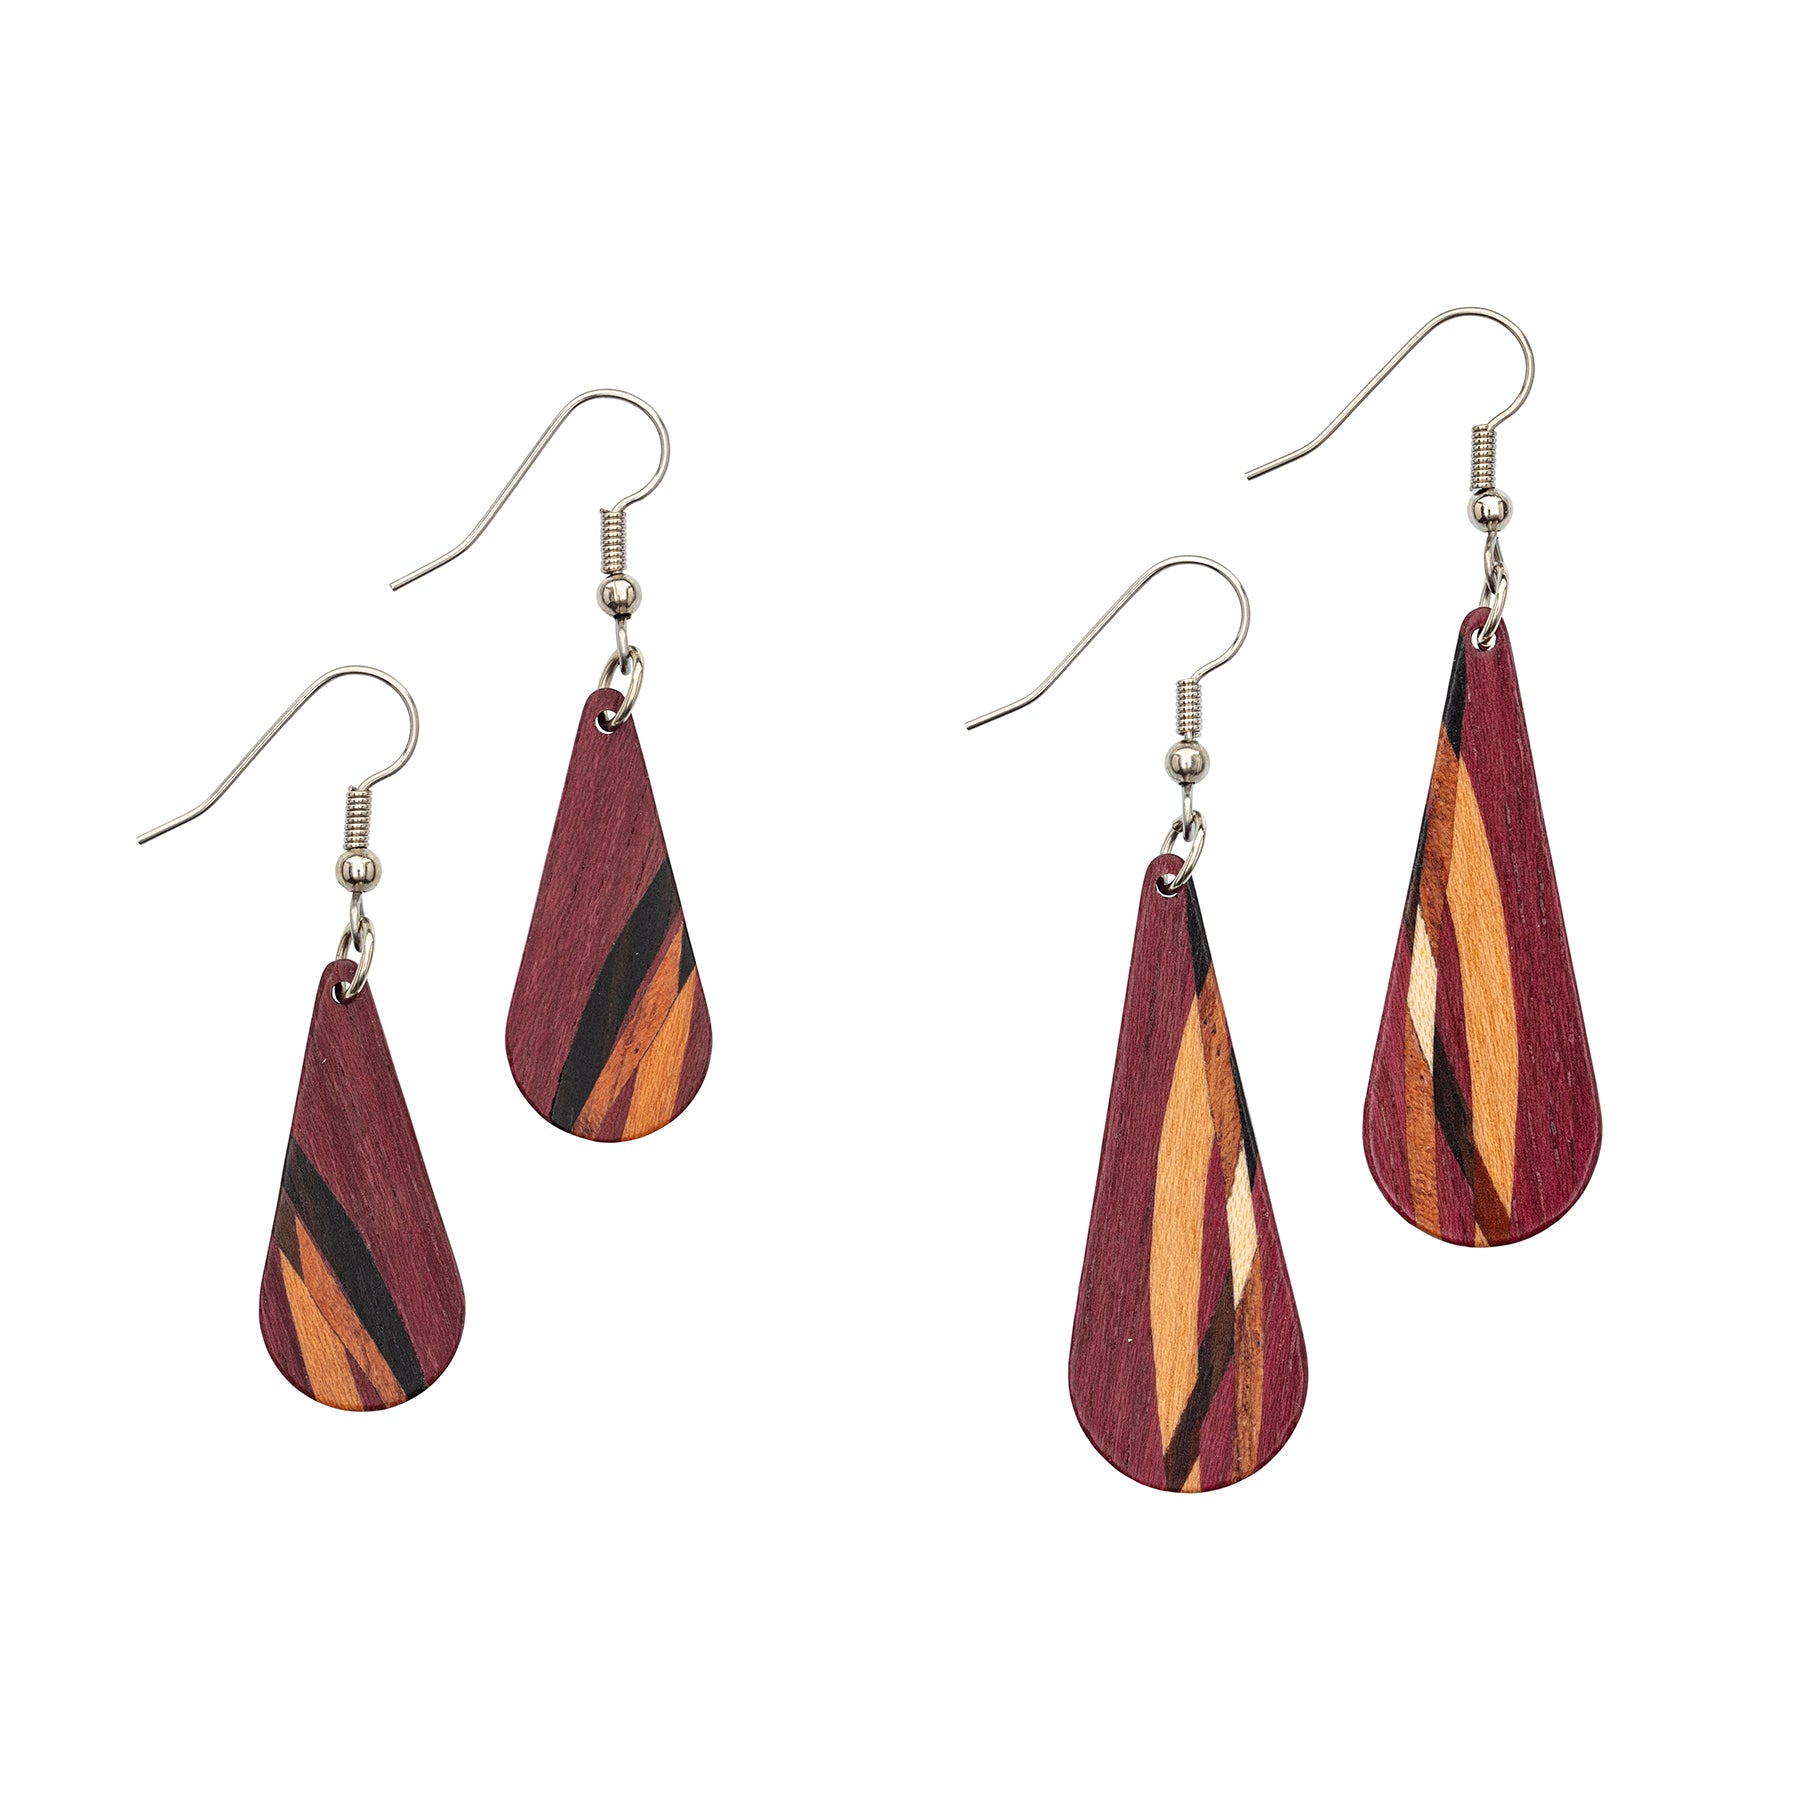 Teardrop earrings inlay wood